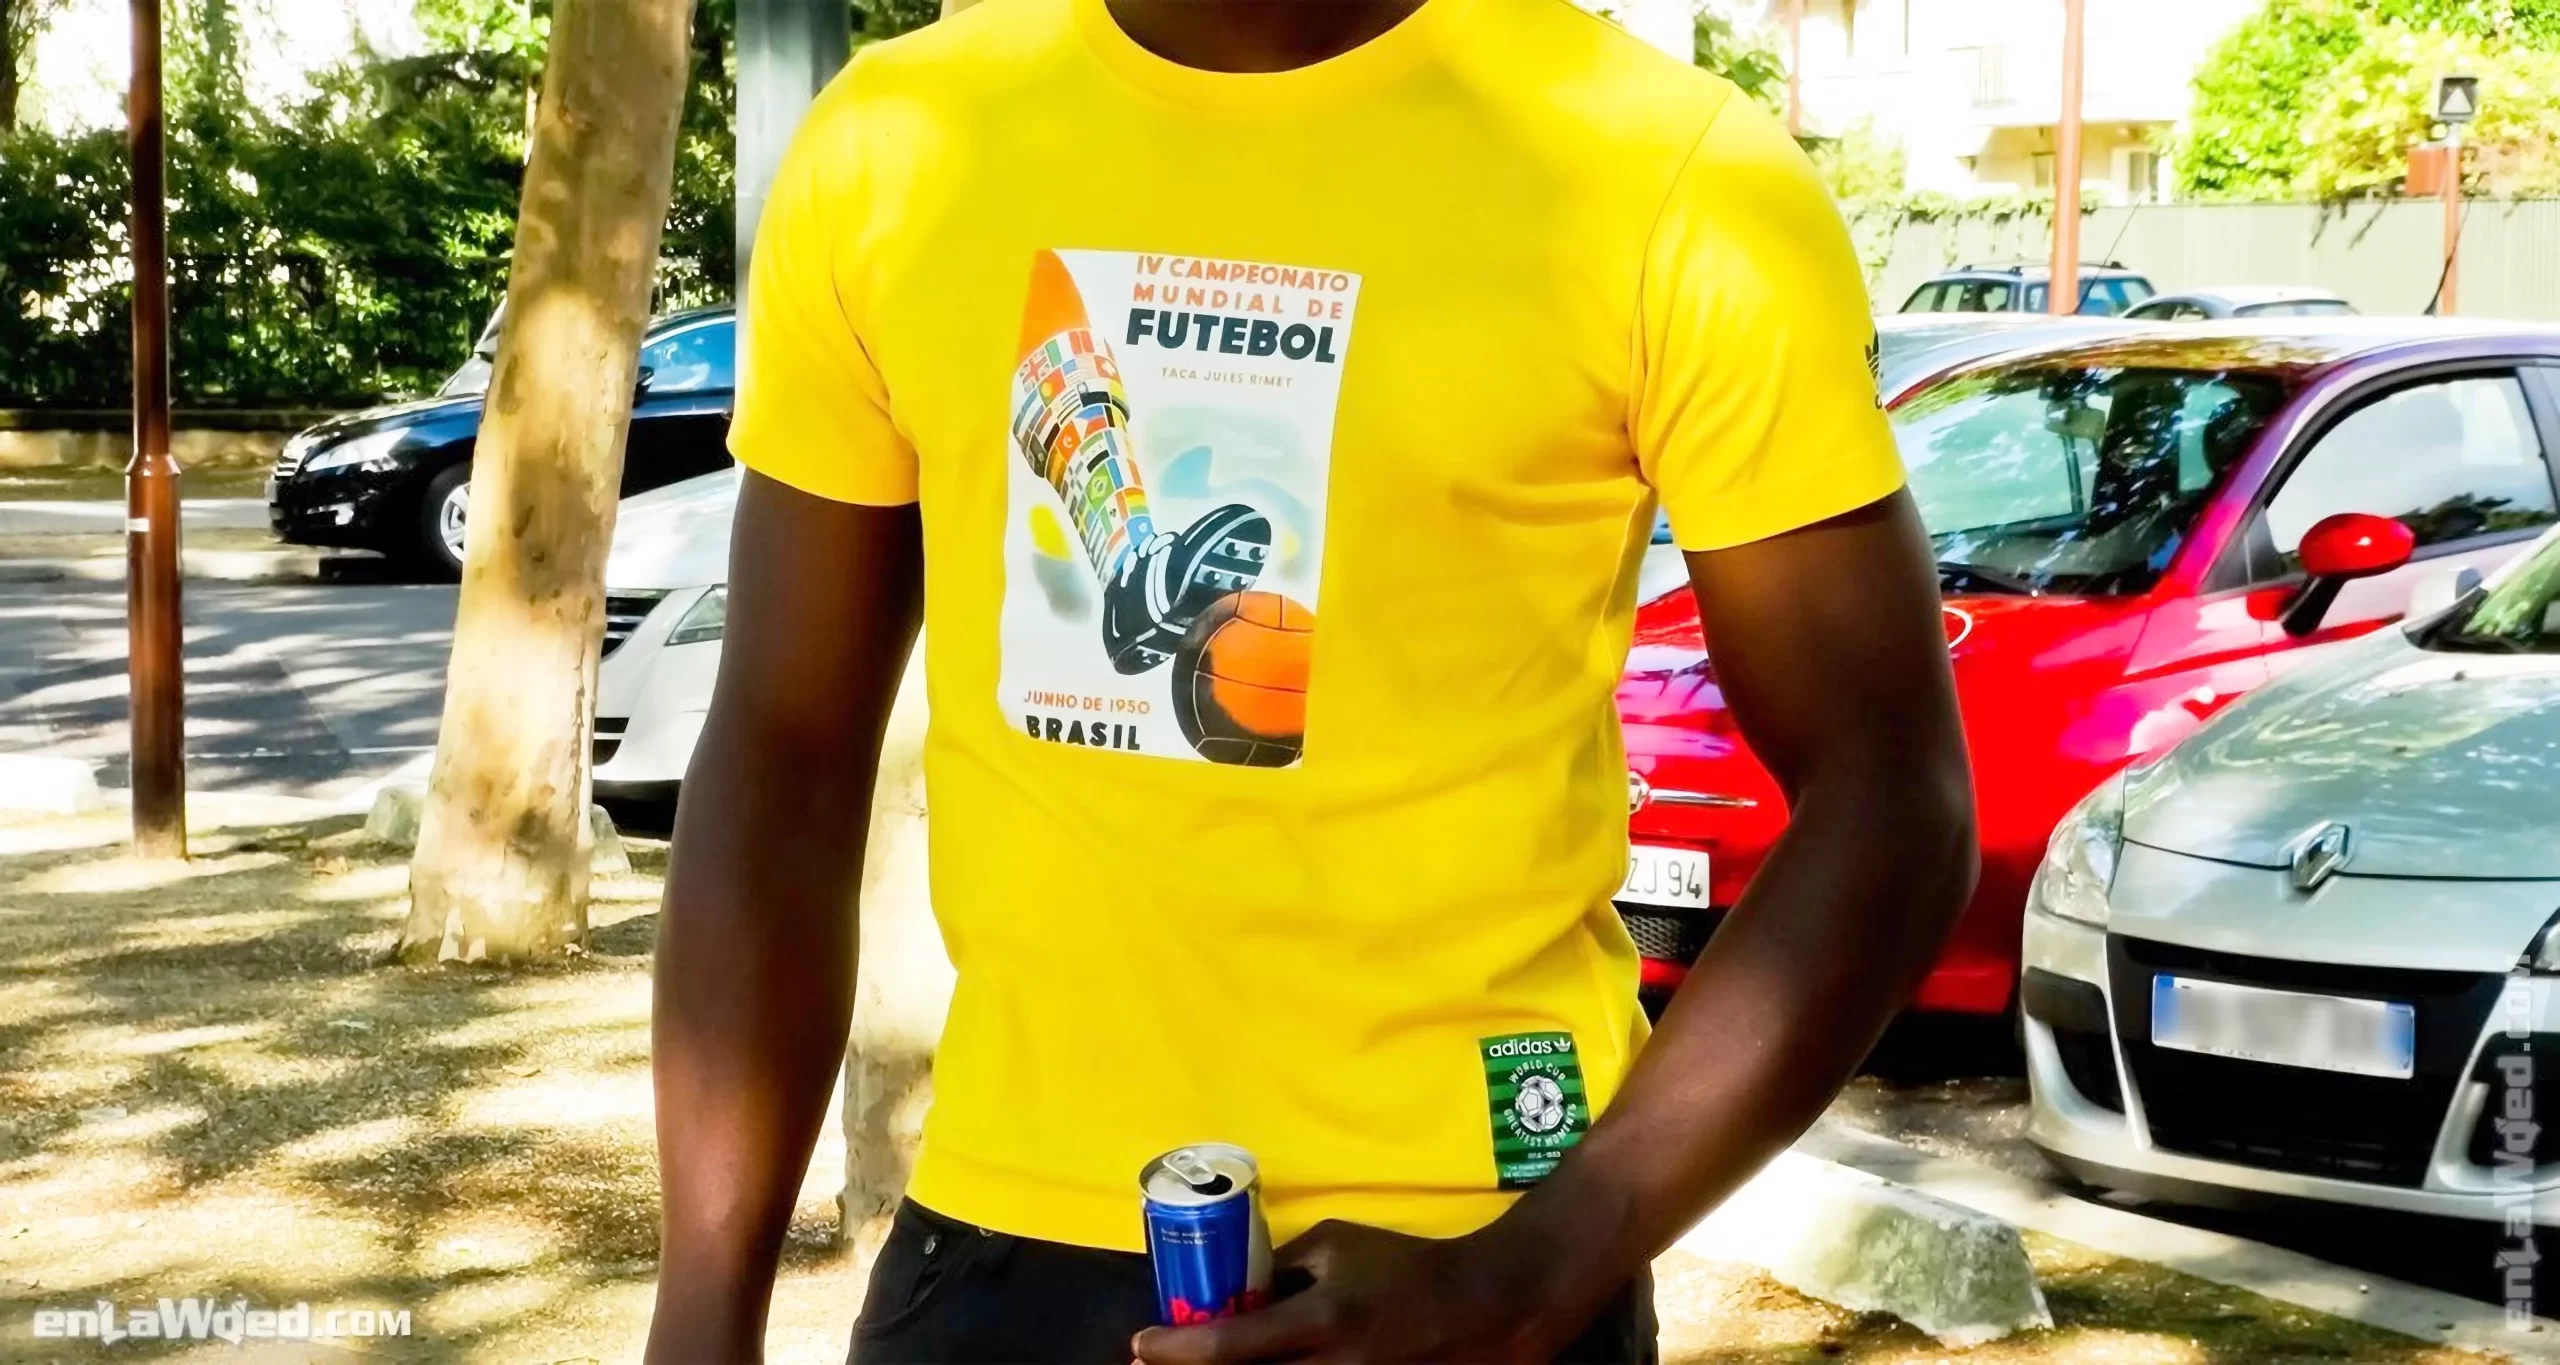 Men’s 2006 Brazil ’50 FIFA World Cup T-Shirt by Adidas: Comprehensive (EnLawded.com file #lmc3zww544bltfnnmix)